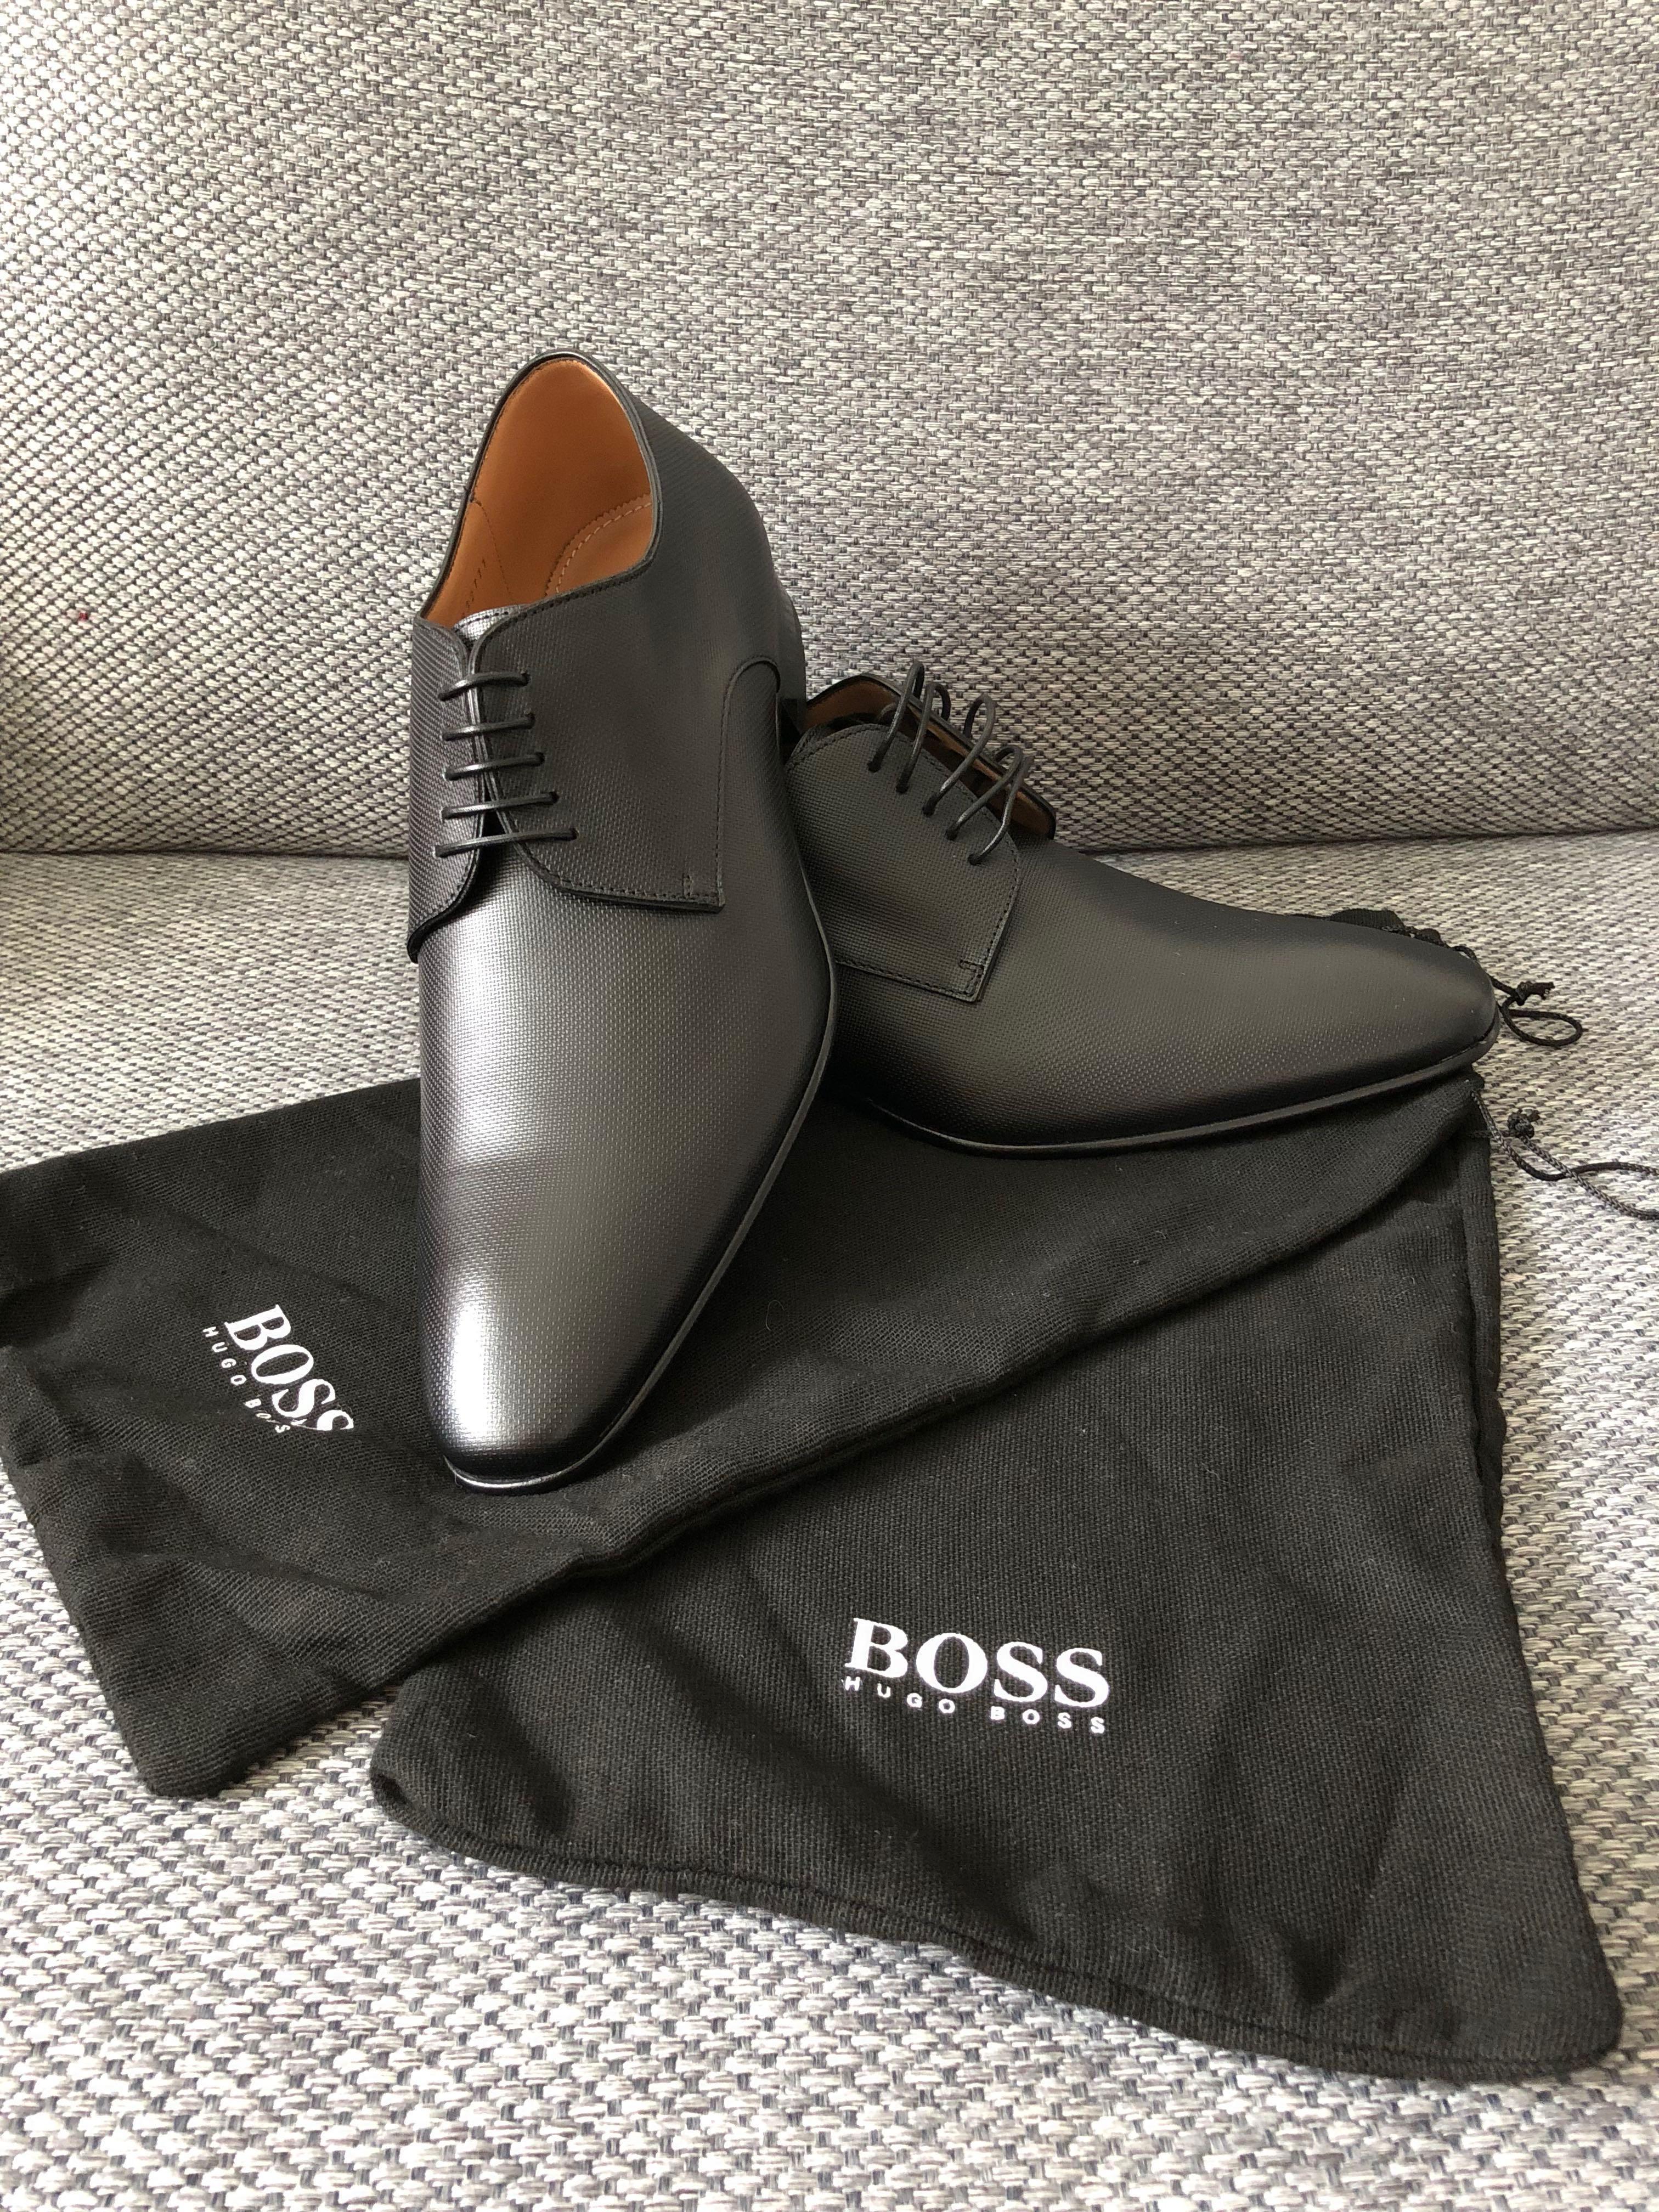 hugo boss new shoes